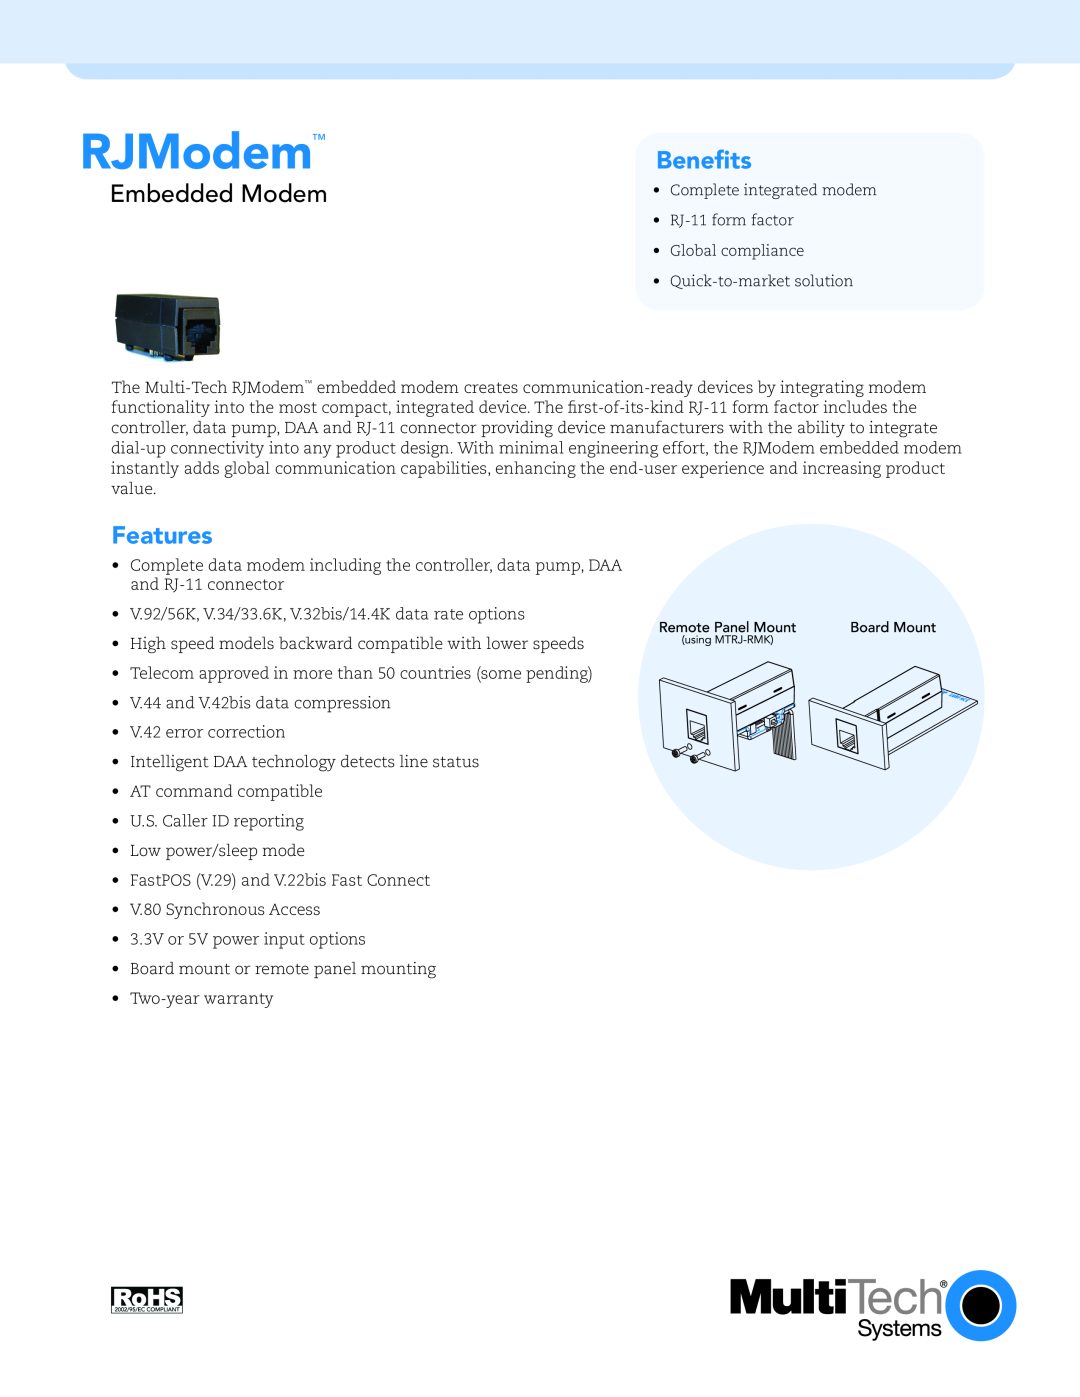 Multi-Tech Systems Embedded Modem warranty RJModem, Benefits, Features 